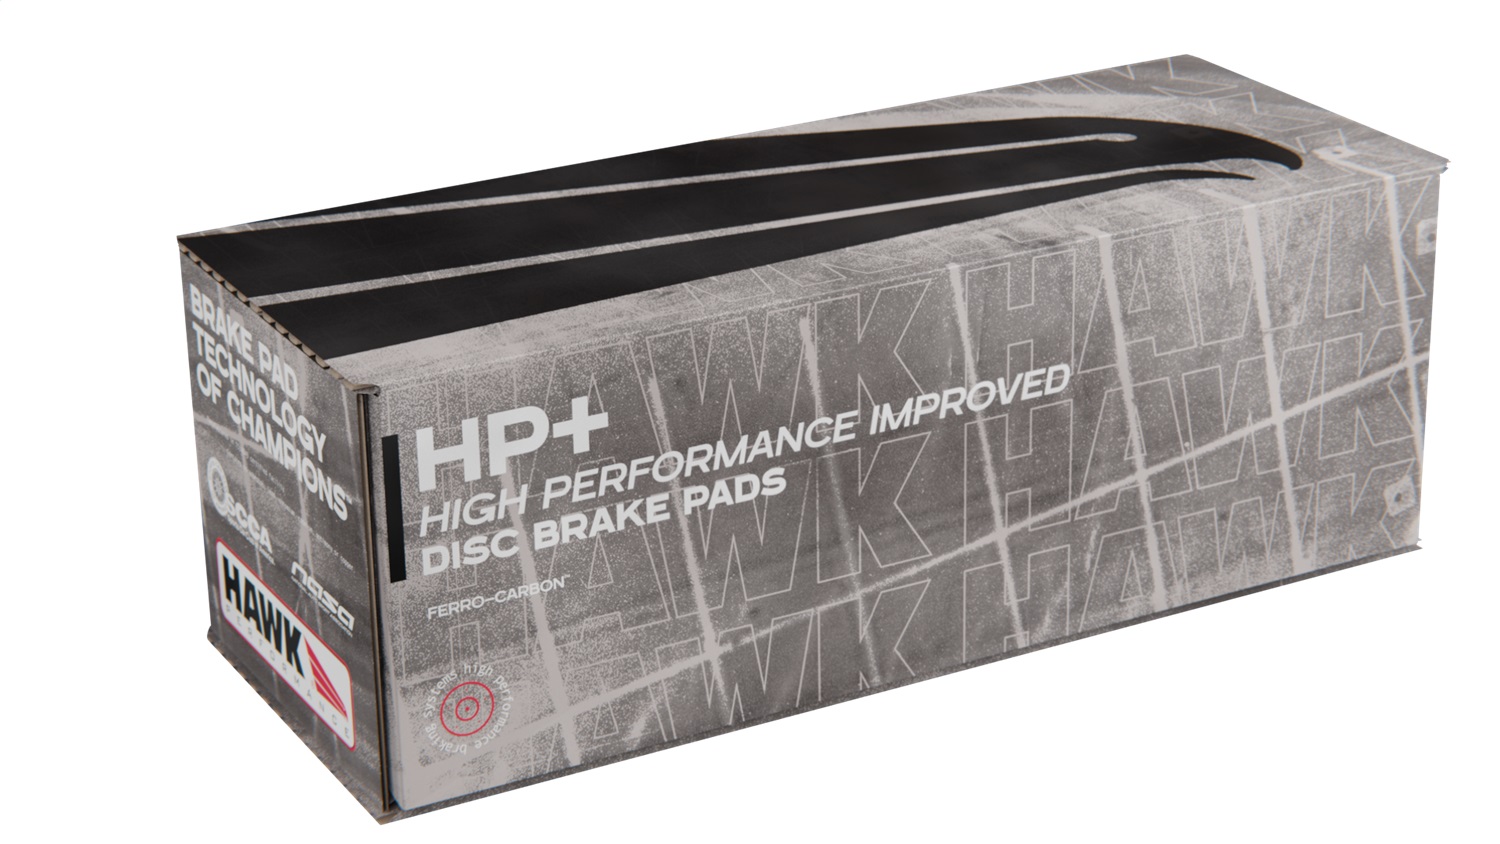 Hawk Performance HB649N.605 HP Plus Disc Brake Pad